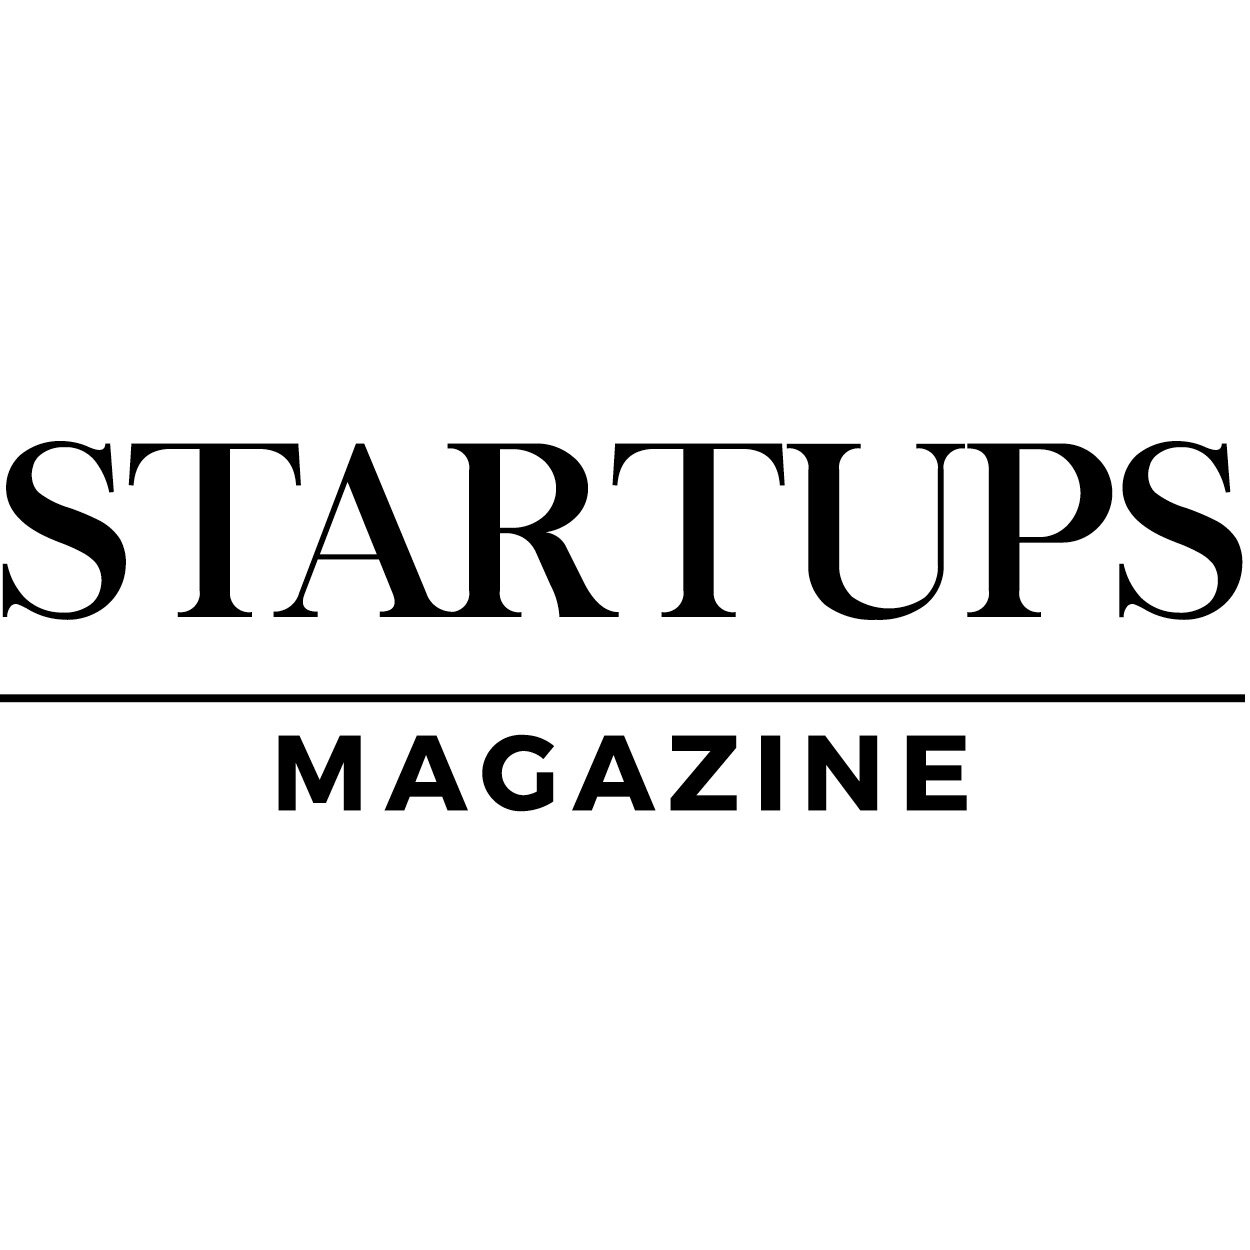 Startups Magazine Logo - Square.jpg